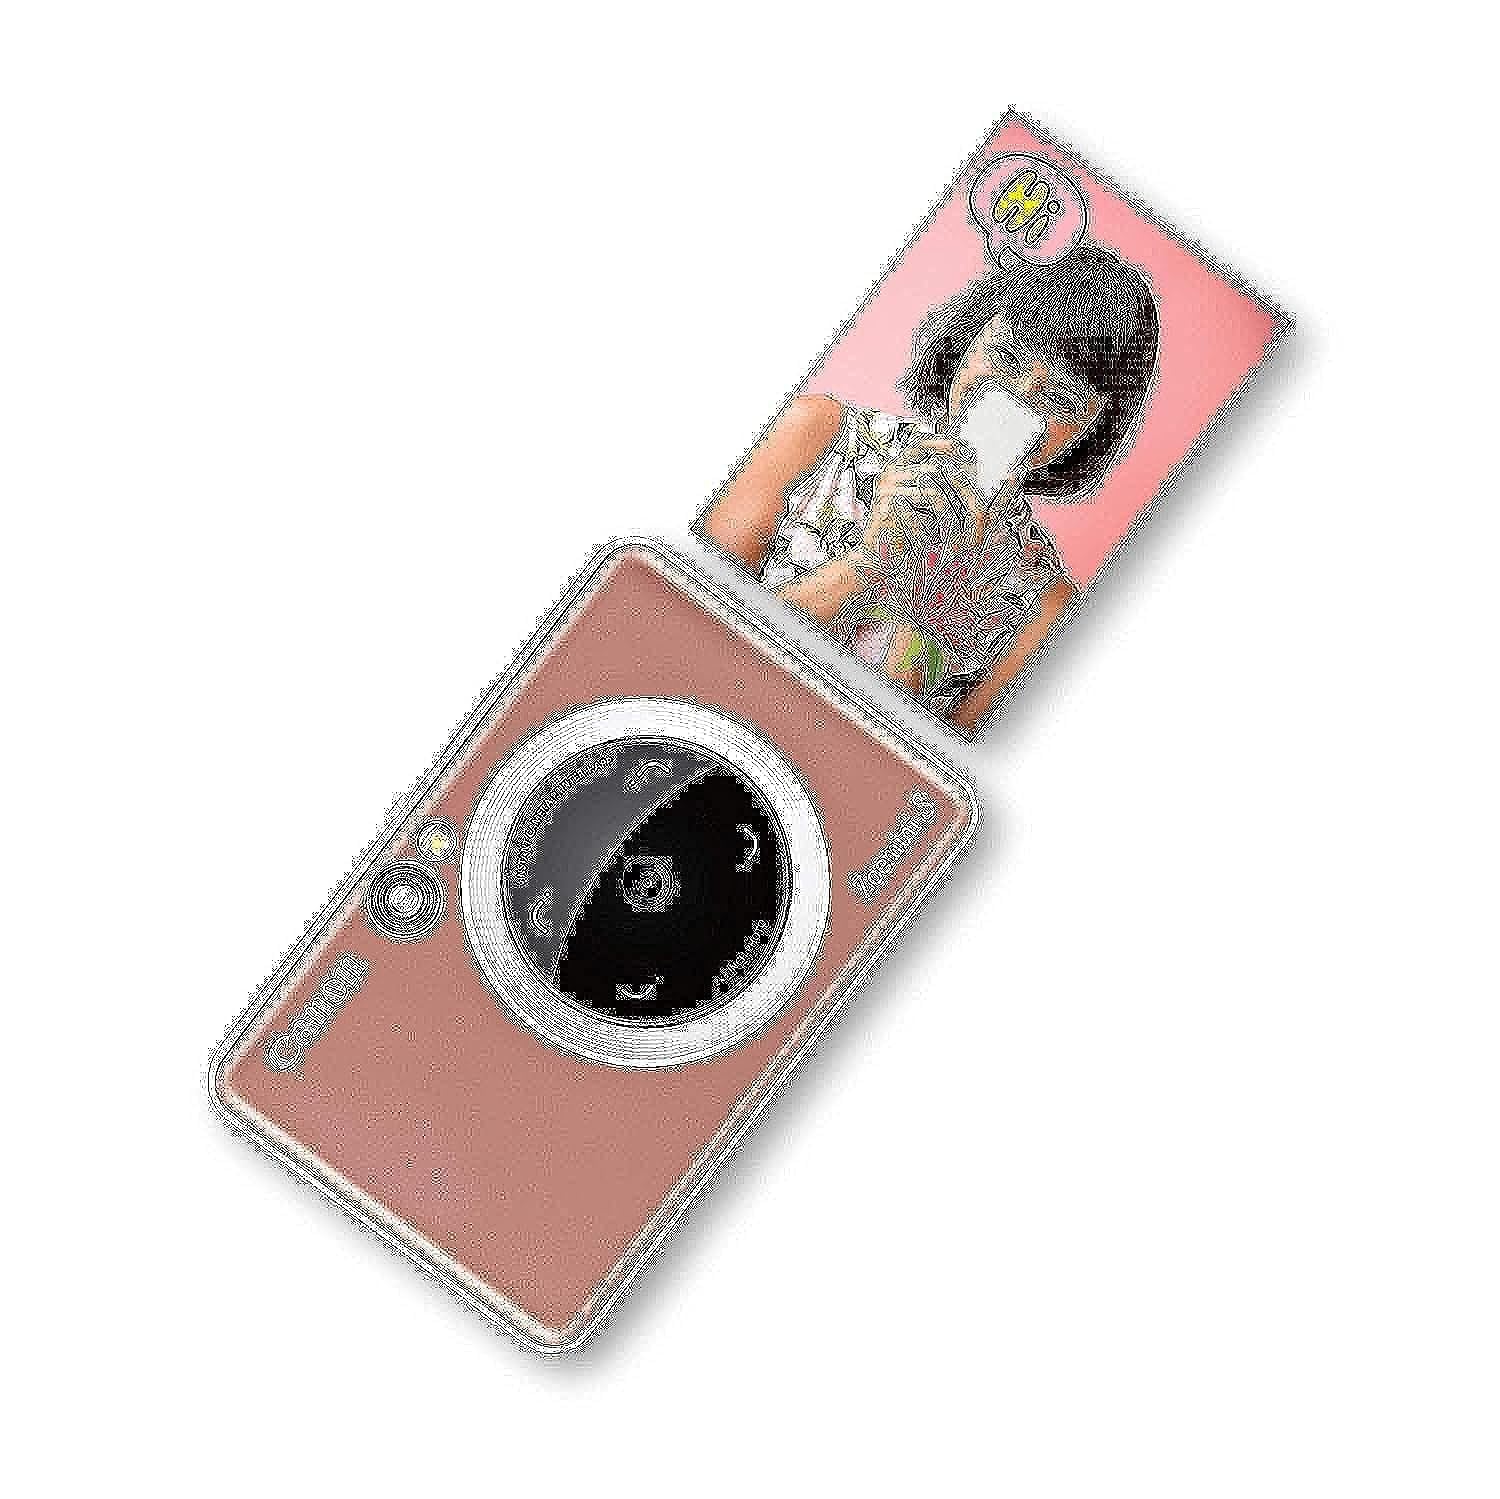 Canon Zoemini S Sofortbildkamera Mini Fotodrucker digital 8 MP (Sucher, Ringblitz/ LED Blitz, Micro SD Kartenslot, Print App, ZINK-Druck tintenfrei, Sofortdruck, Fernauslöser) rose gold